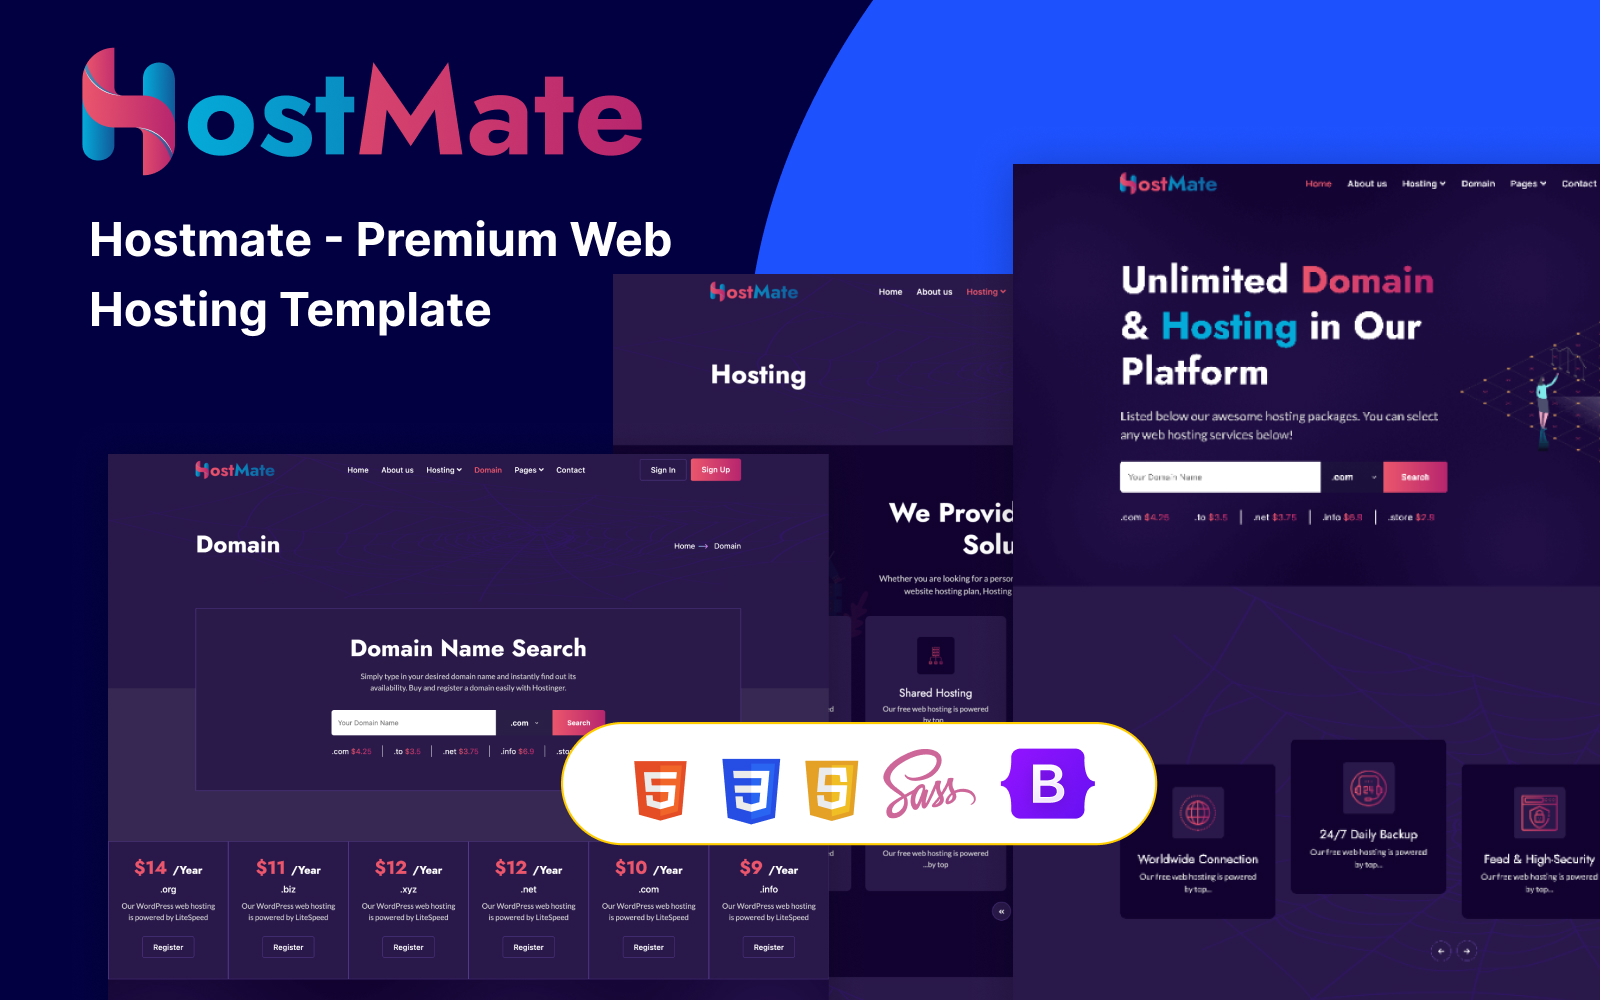 Hostmate - Premium Web Hosting HTML Template